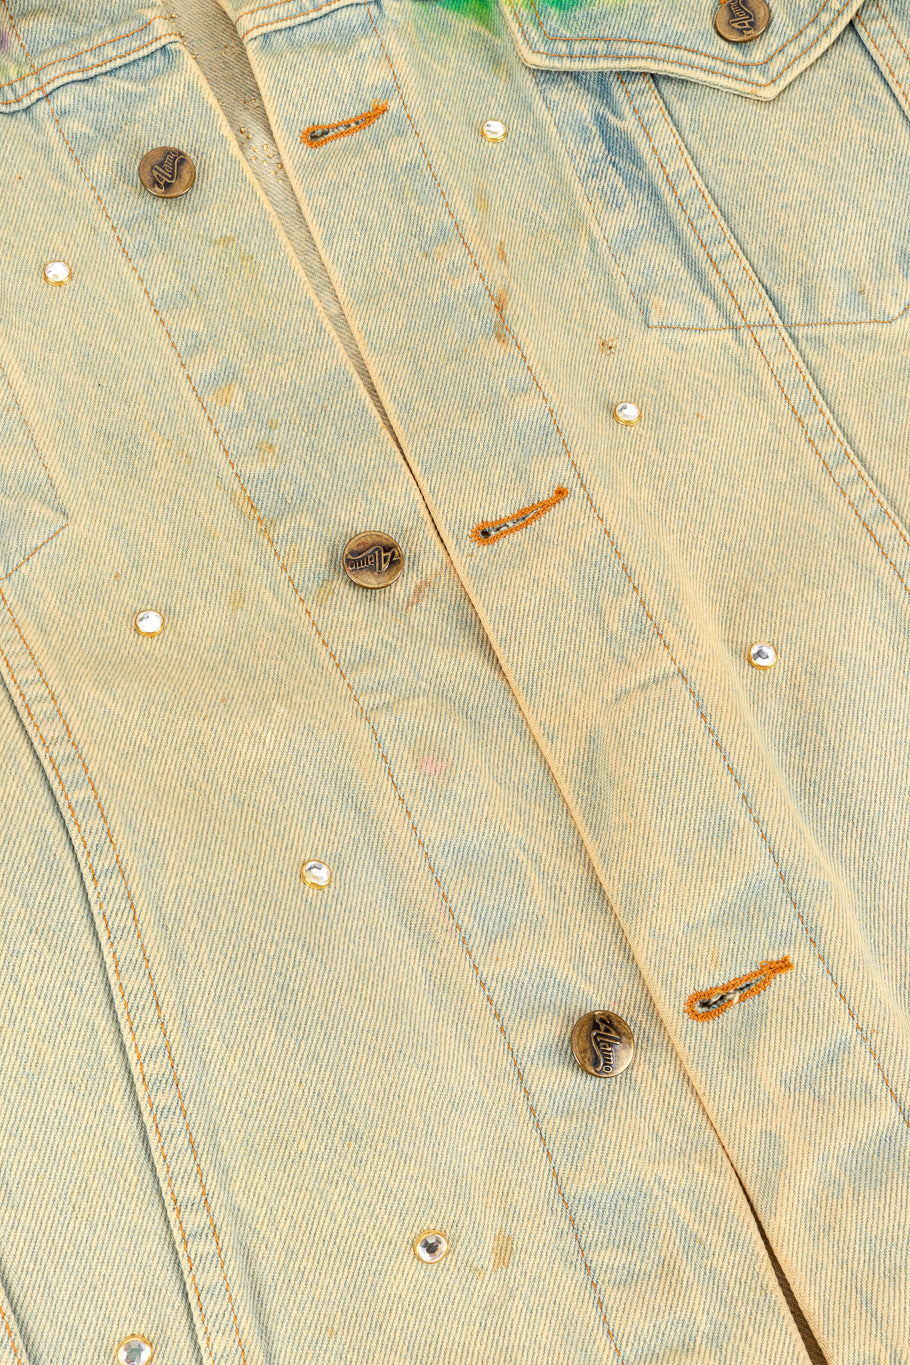 Vintage Tony Alamo Beverly Hills Jacket front button closure @recess la